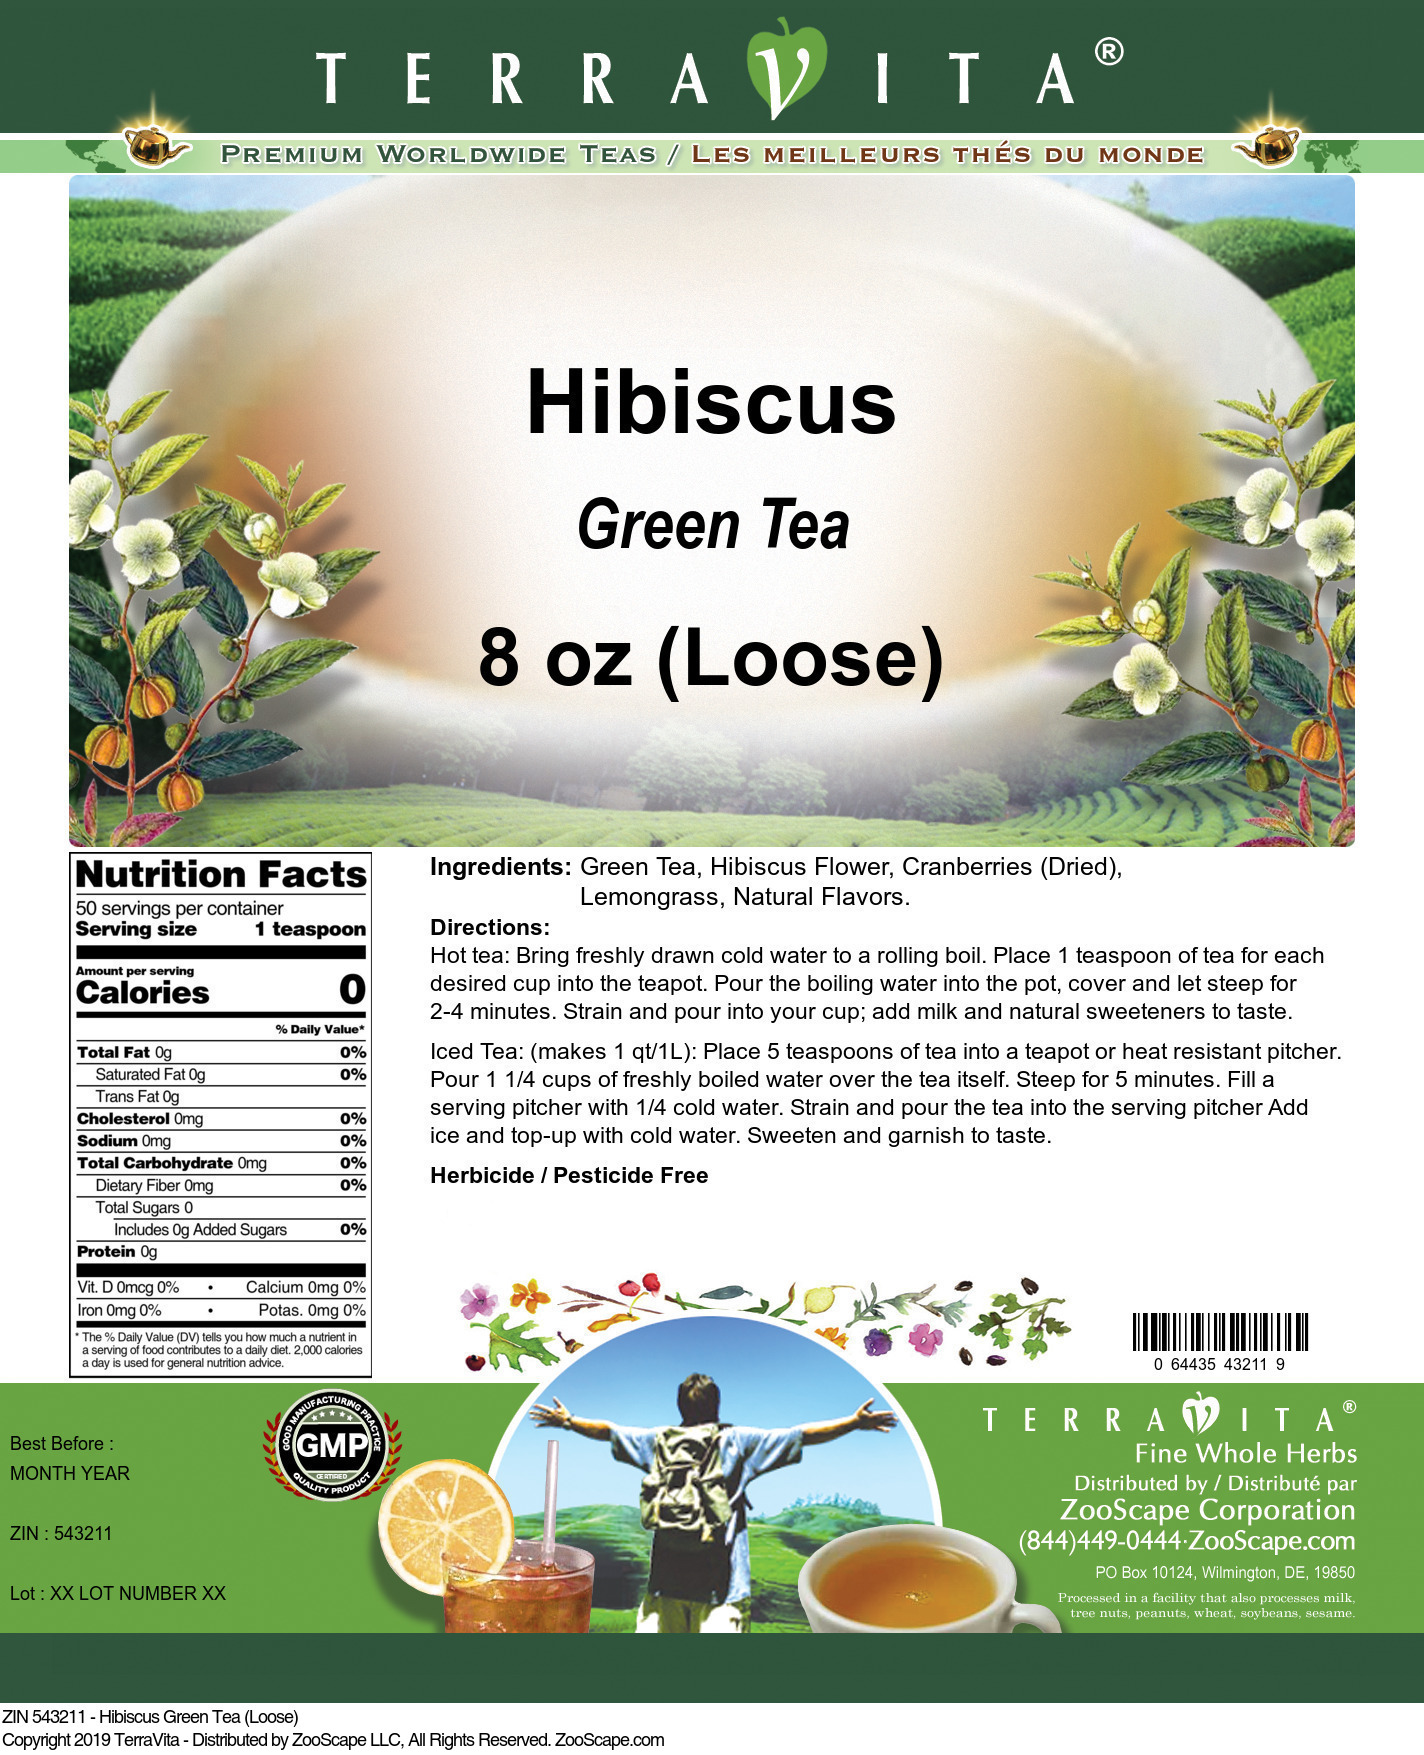 Hibiscus Green Tea (Loose) - Label